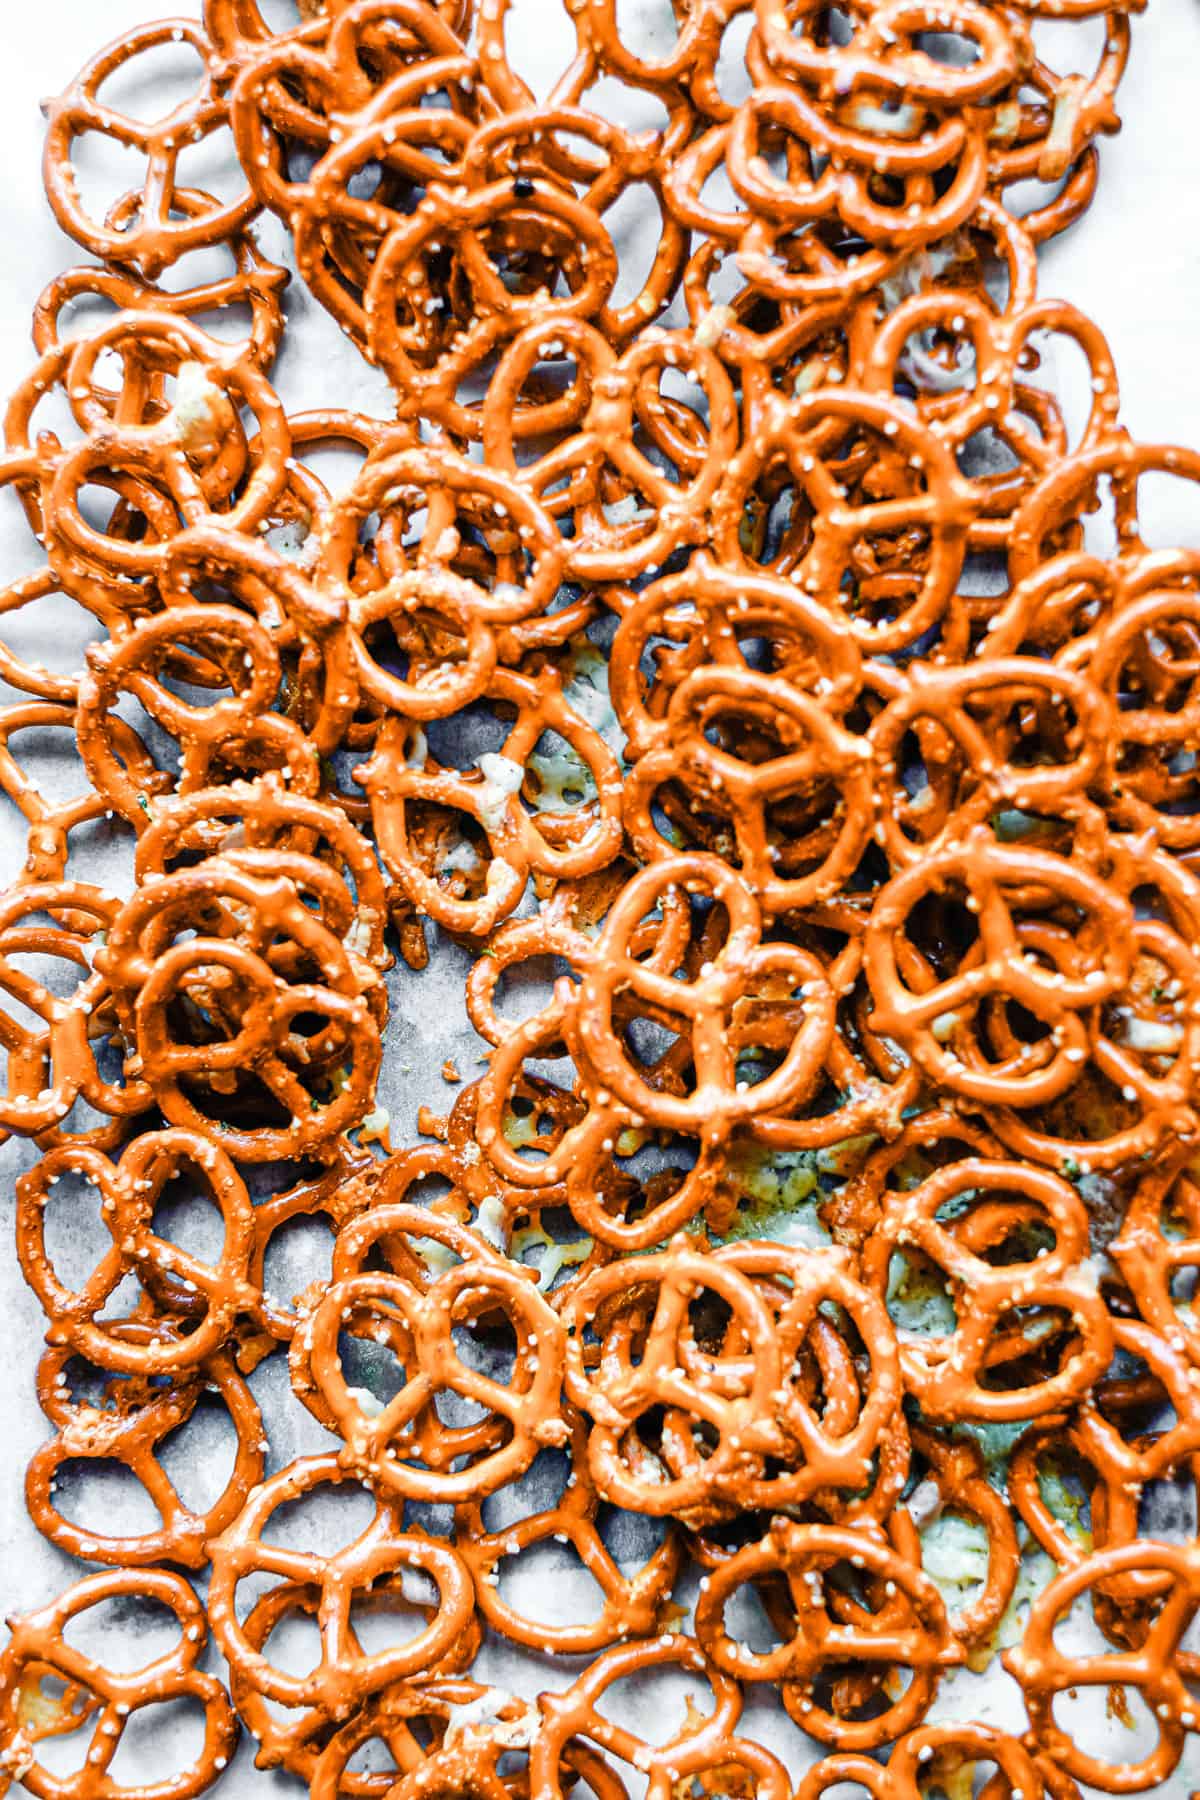  seasoned ranch pretzels on a baking tray